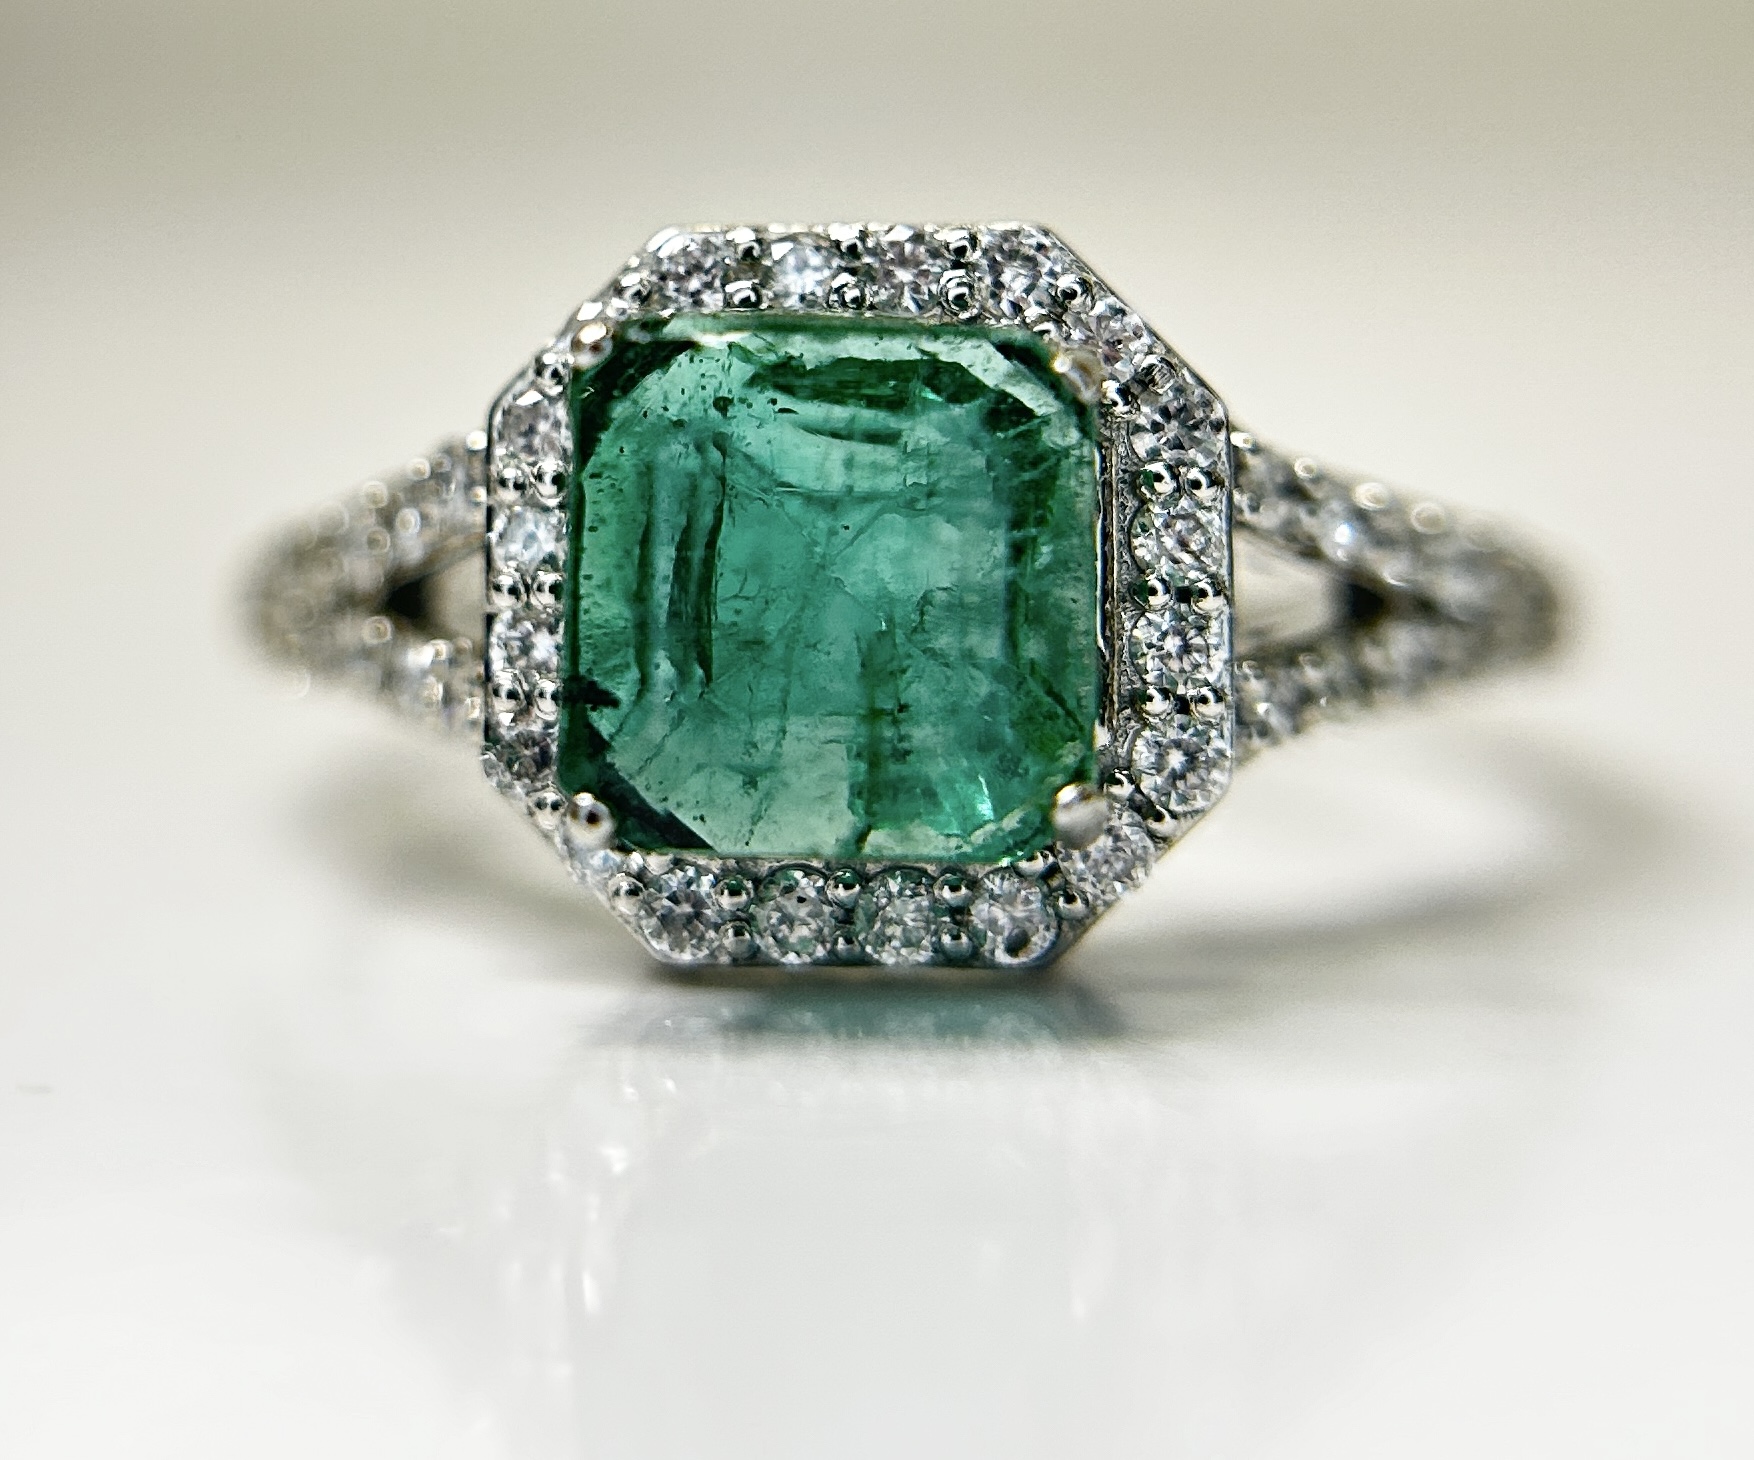 Beautiful 1.64 CT Natural Emerald Ring With Natural Diamonds & Platinum 950